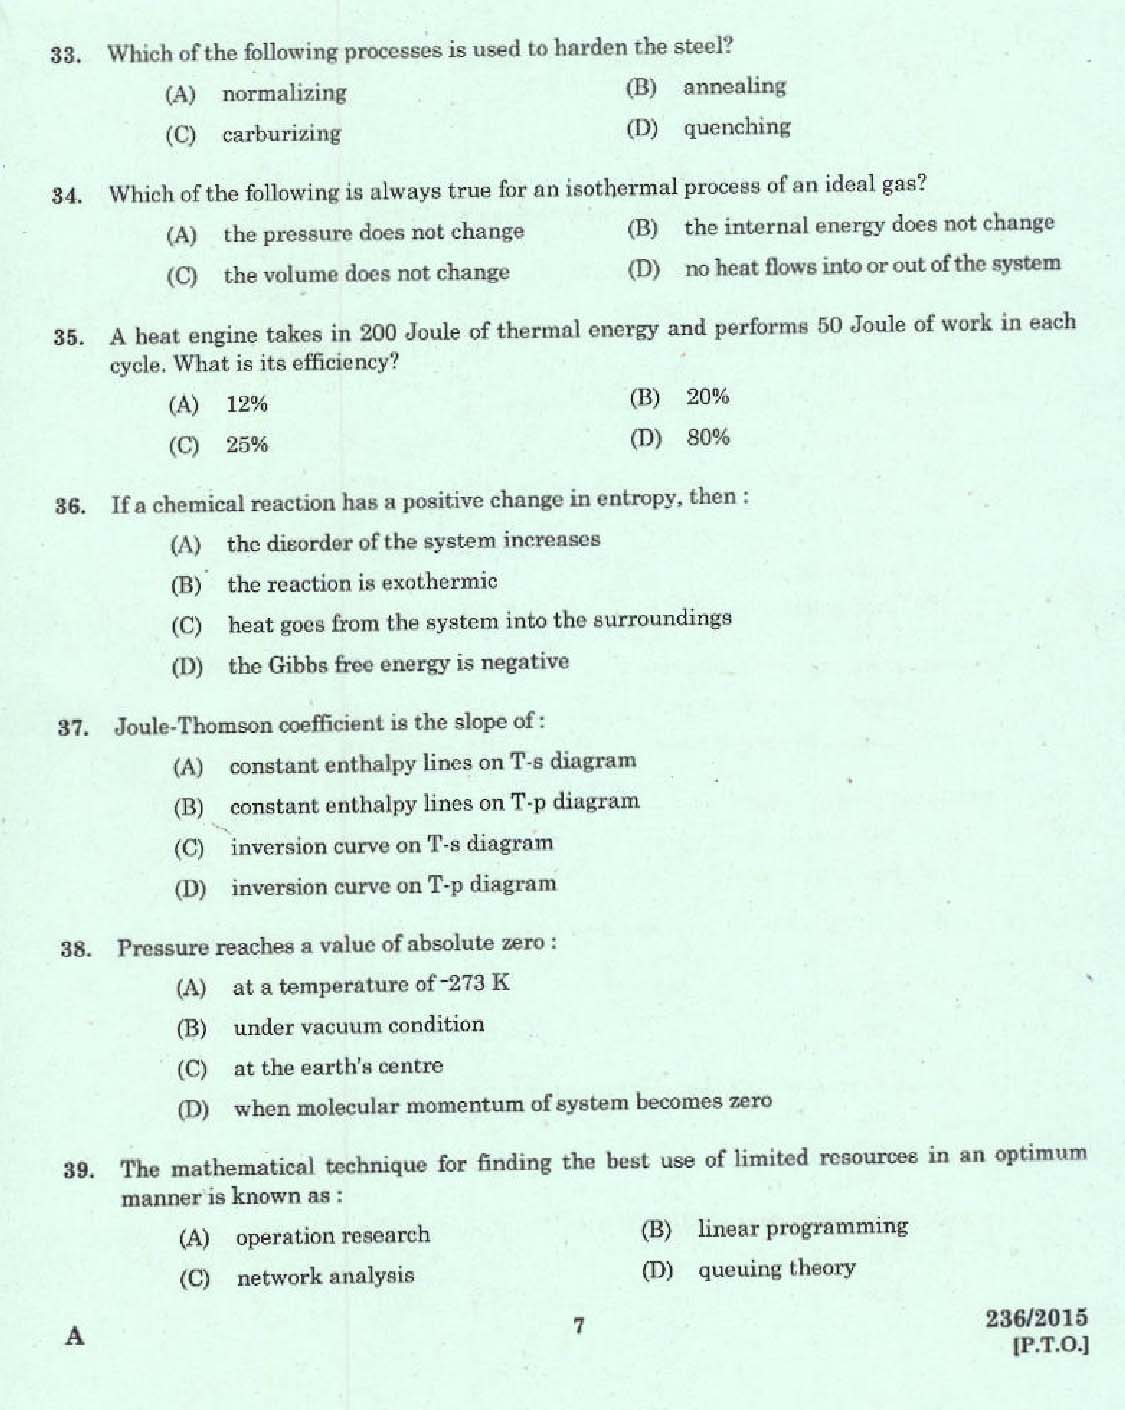 Kerala PSC Foreman Exam 2015 Question Paper Code 2362015 5